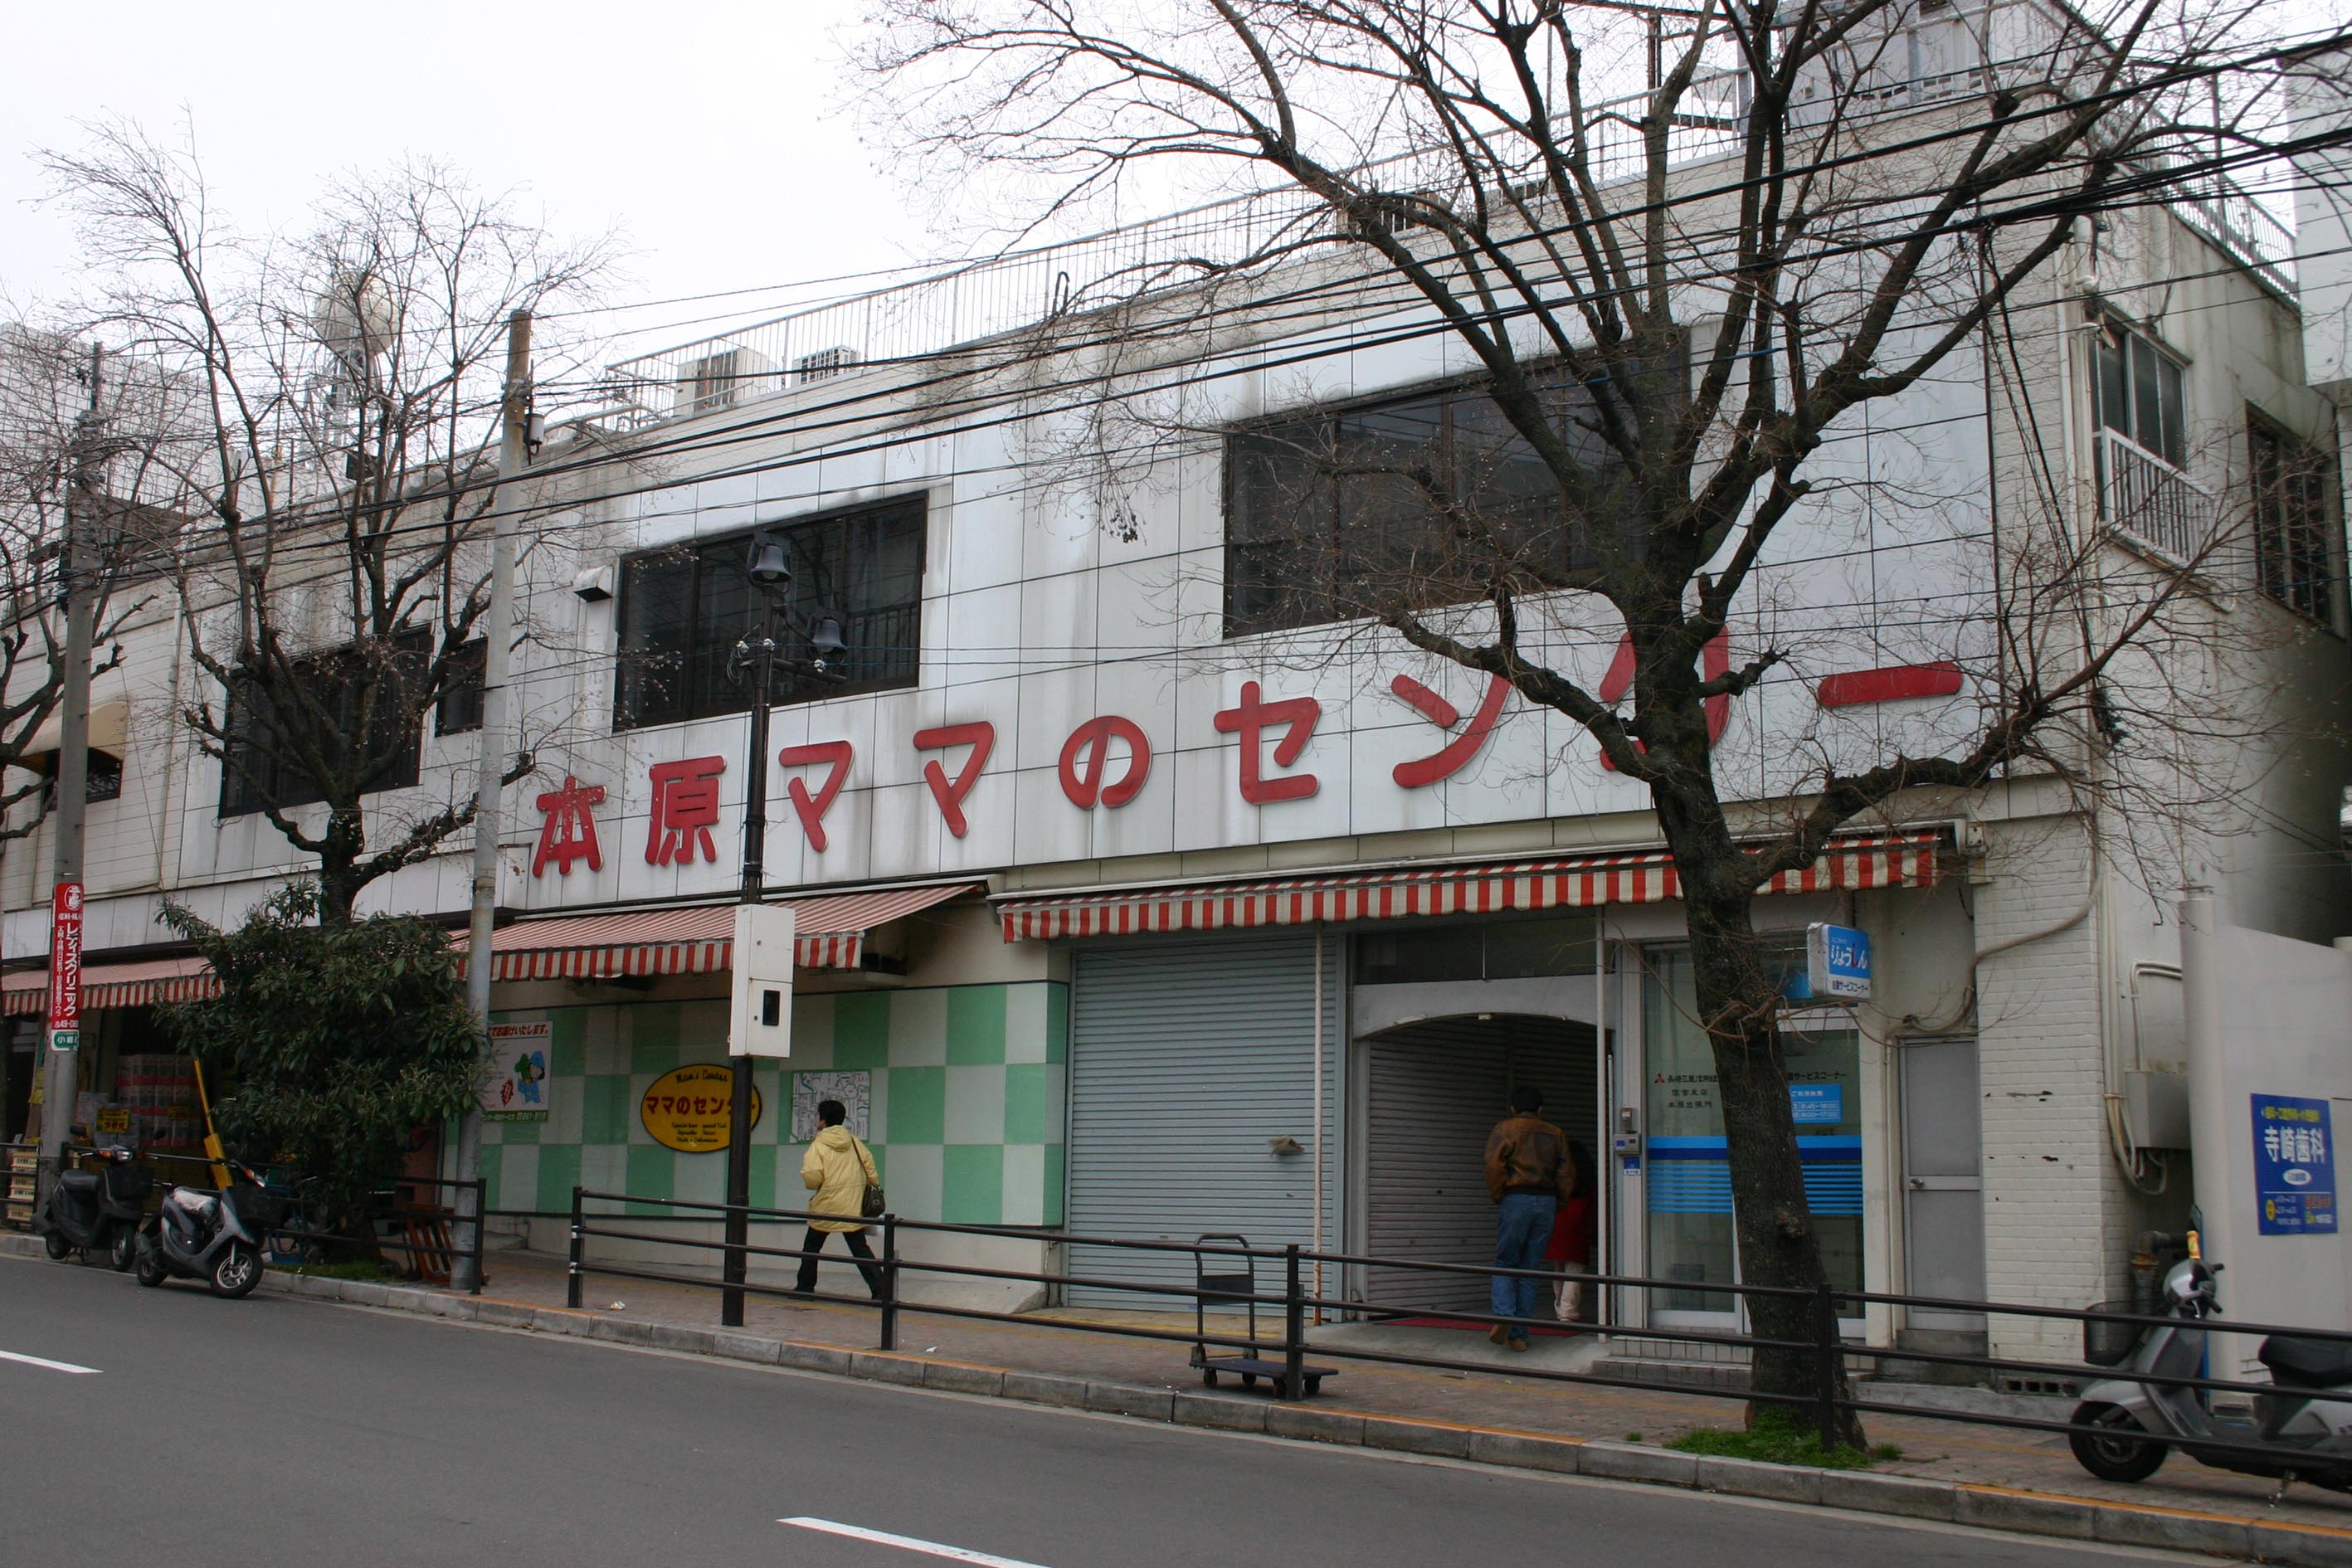 Supermarket. 544m until the mom of center Motohara store (Super)